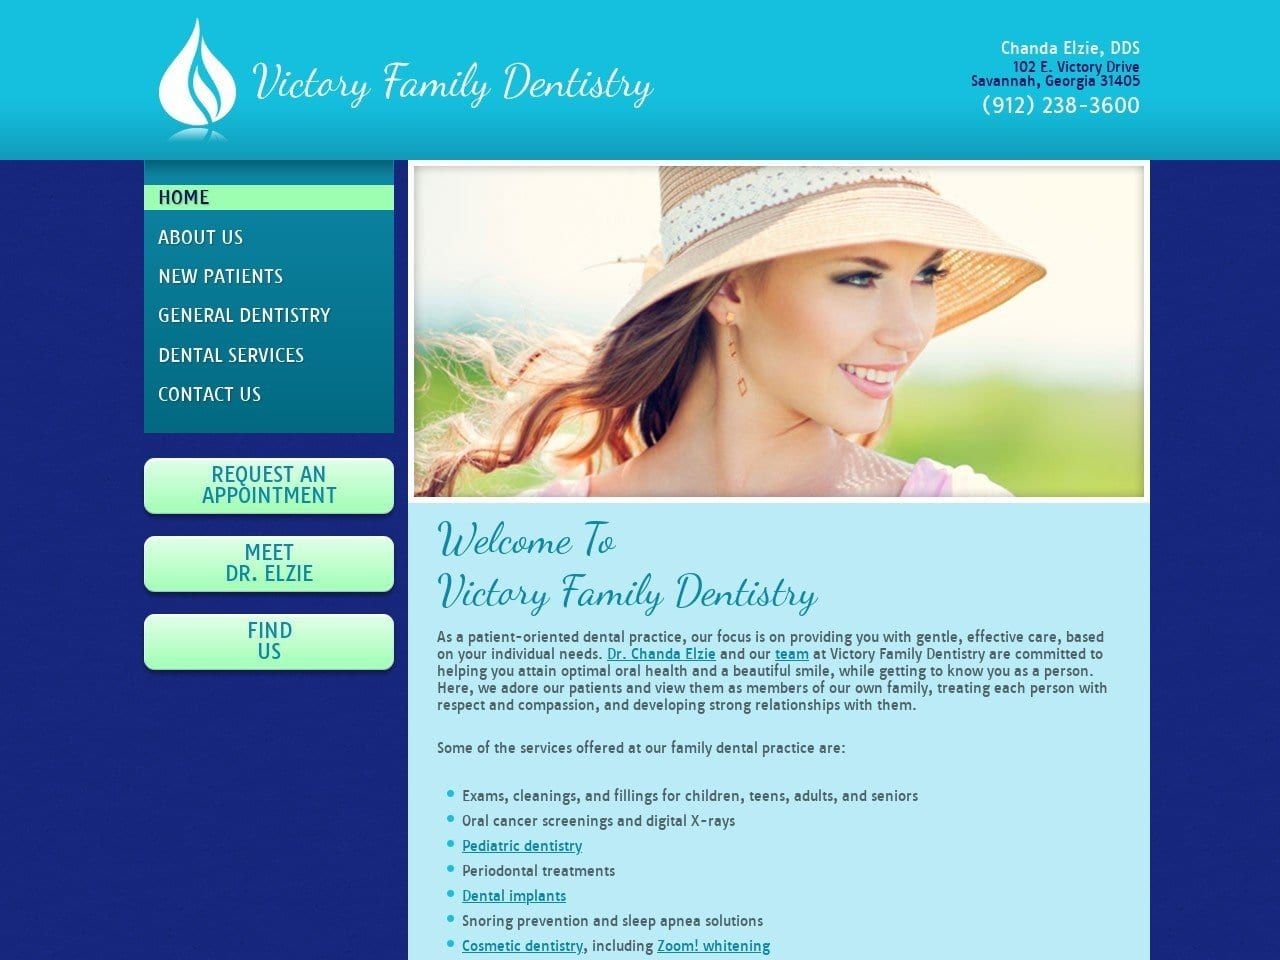 Victory Family Dentistry Chanda Elzie DDS Website Screenshot from victoryfamilydentistry.com